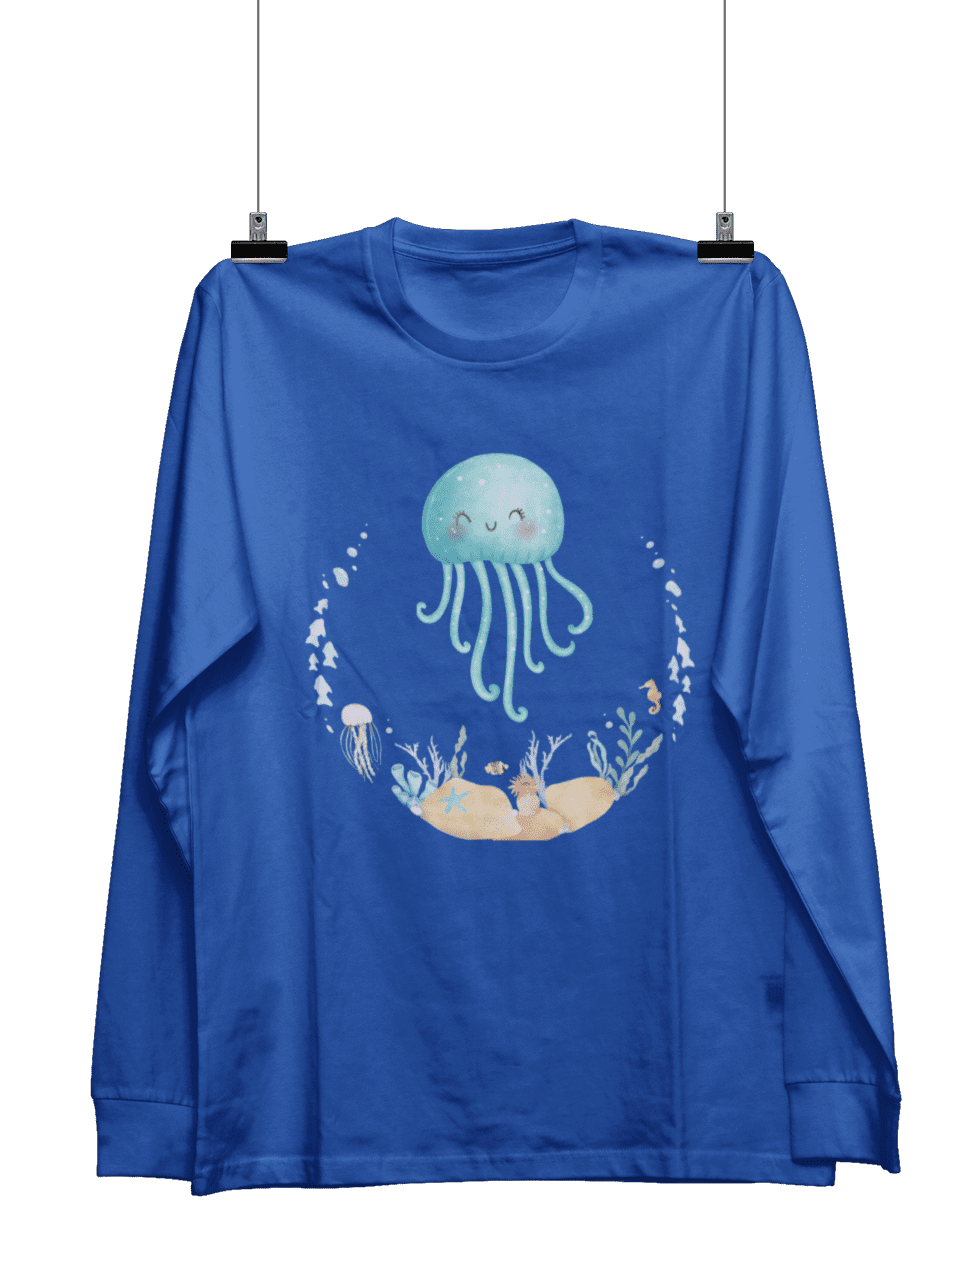 kiMaran Design T-Shirt Jelly Fish Smiling Ocean Fish Unisex Short Sleeve  Tee (Team Purple XL)